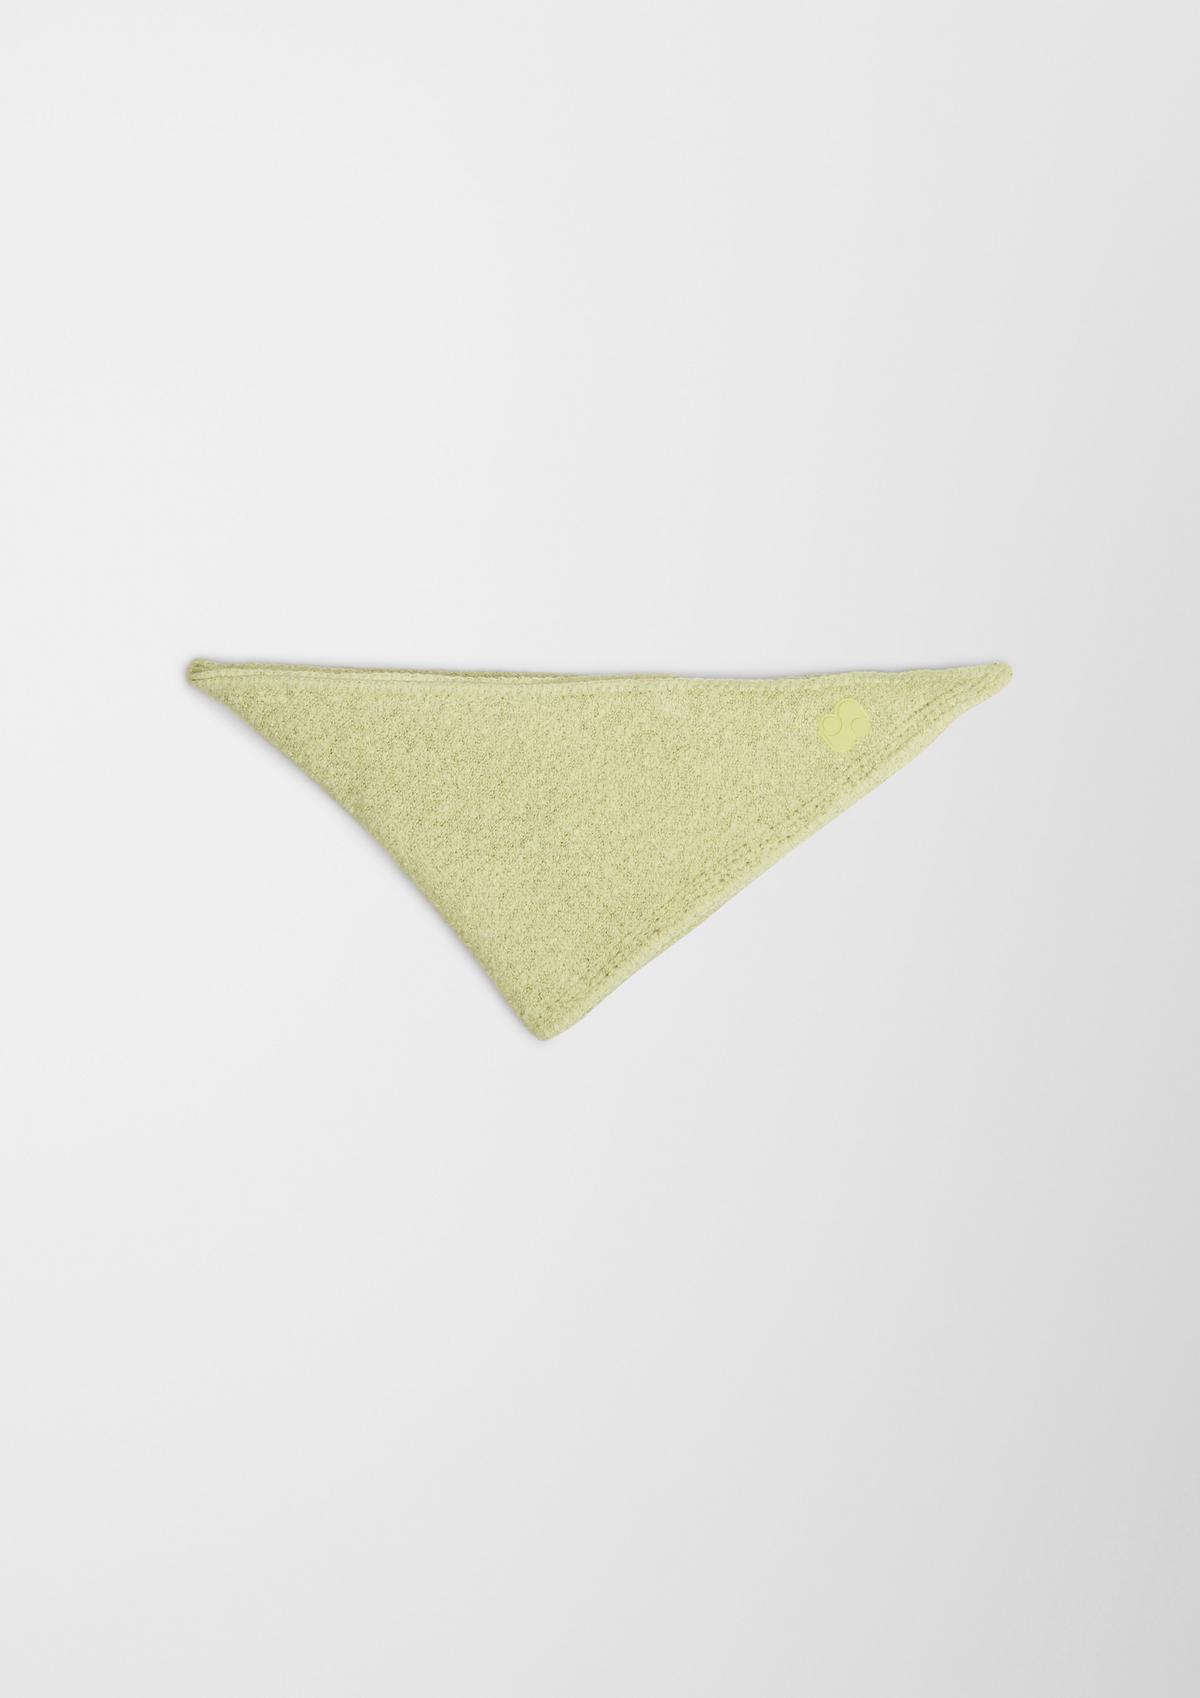 s.Oliver Triangular scarf made of teddy plush